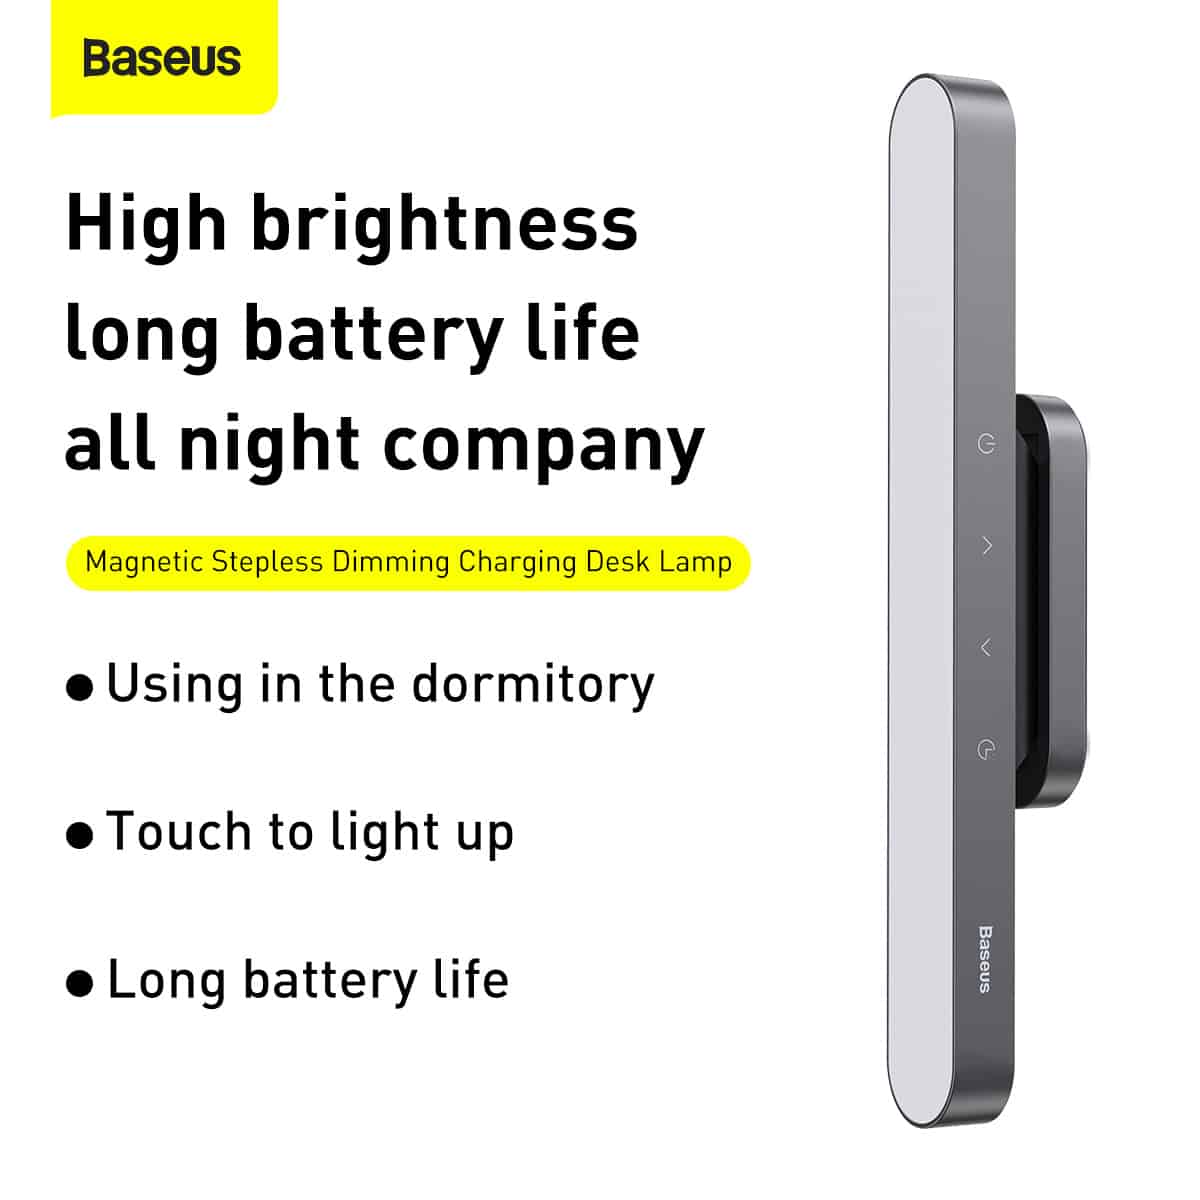 Baseus Magnetic Charging Desk Lamp - Gray a 21